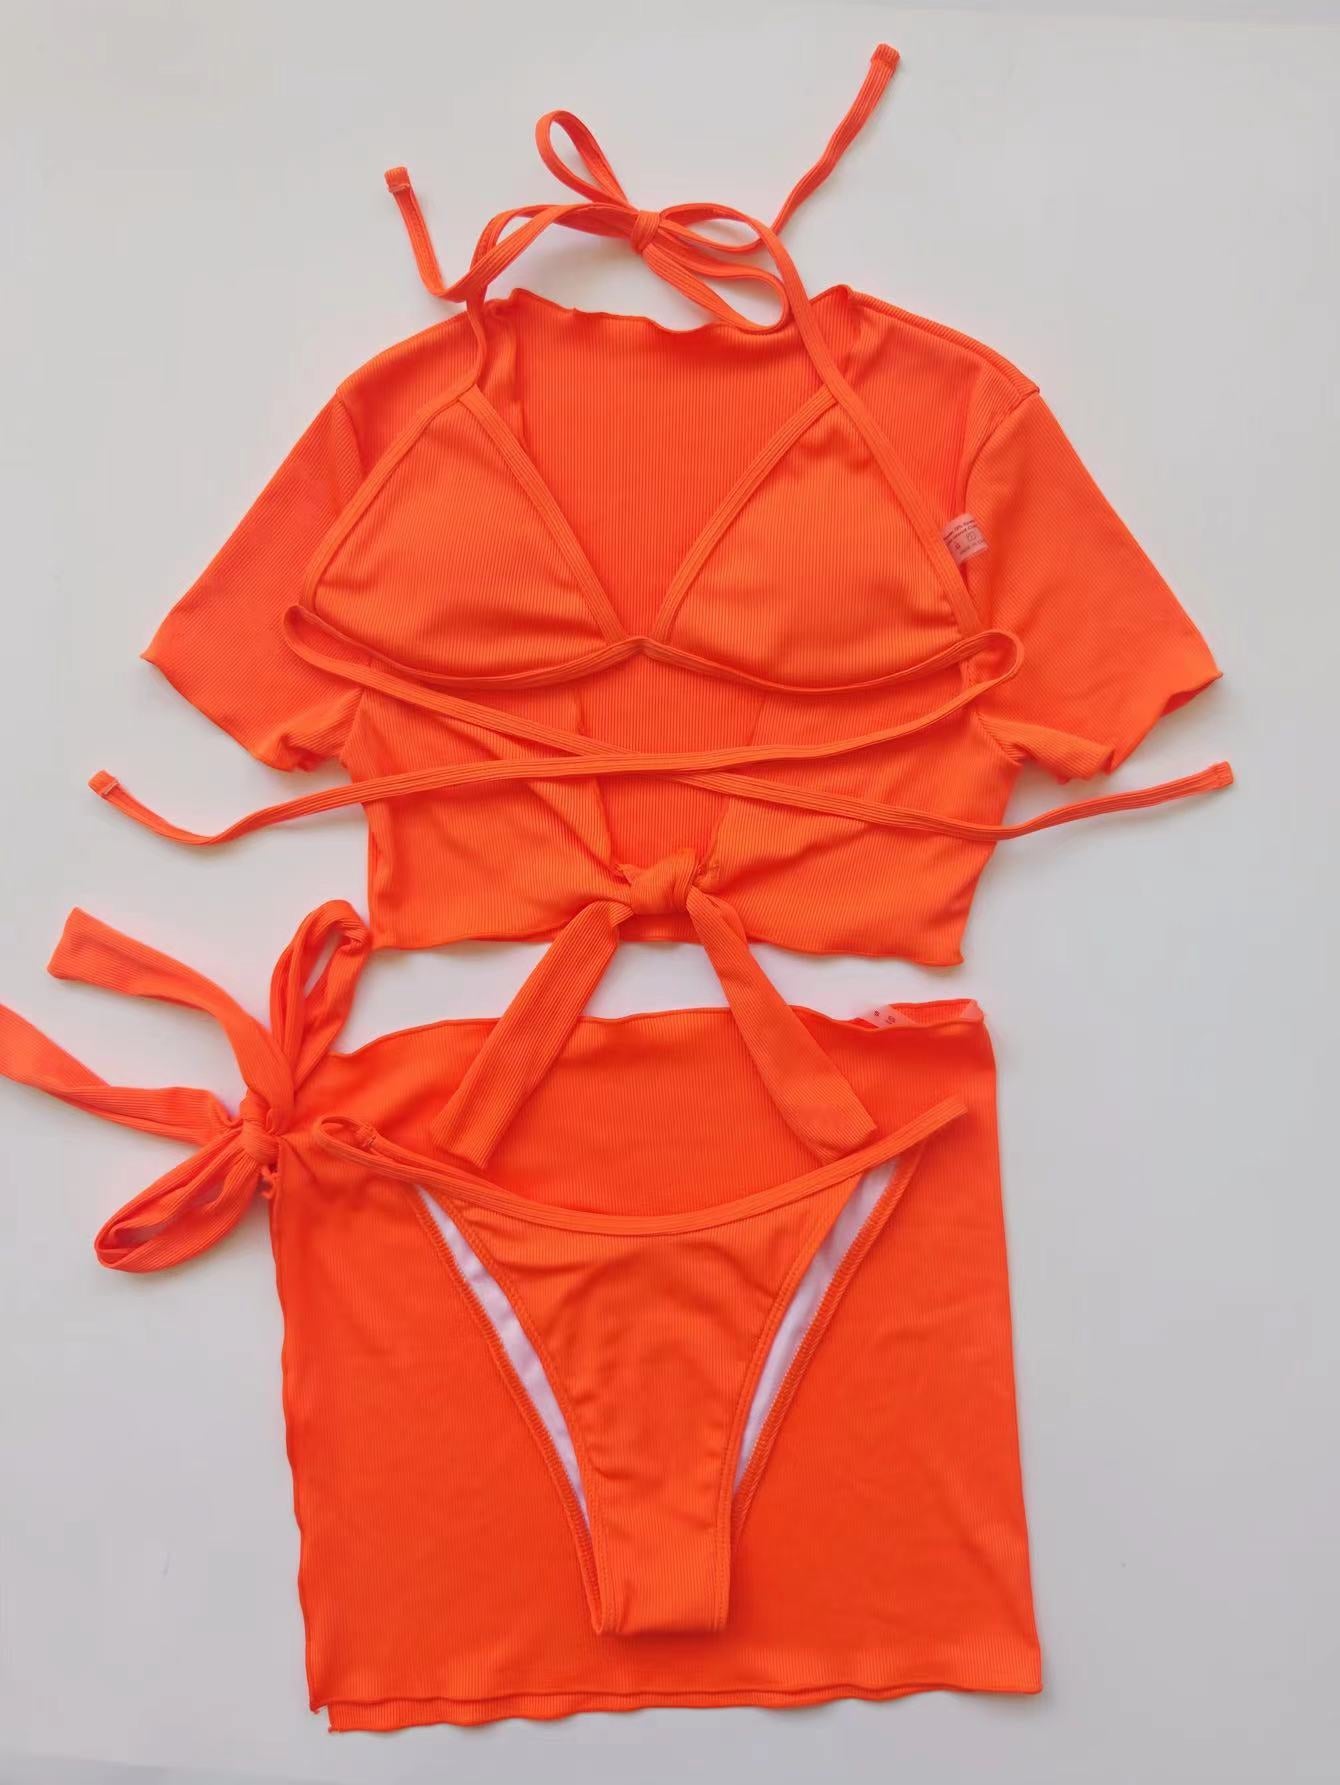 Pamela 4 Piece Set Ribbed Halter Bikini